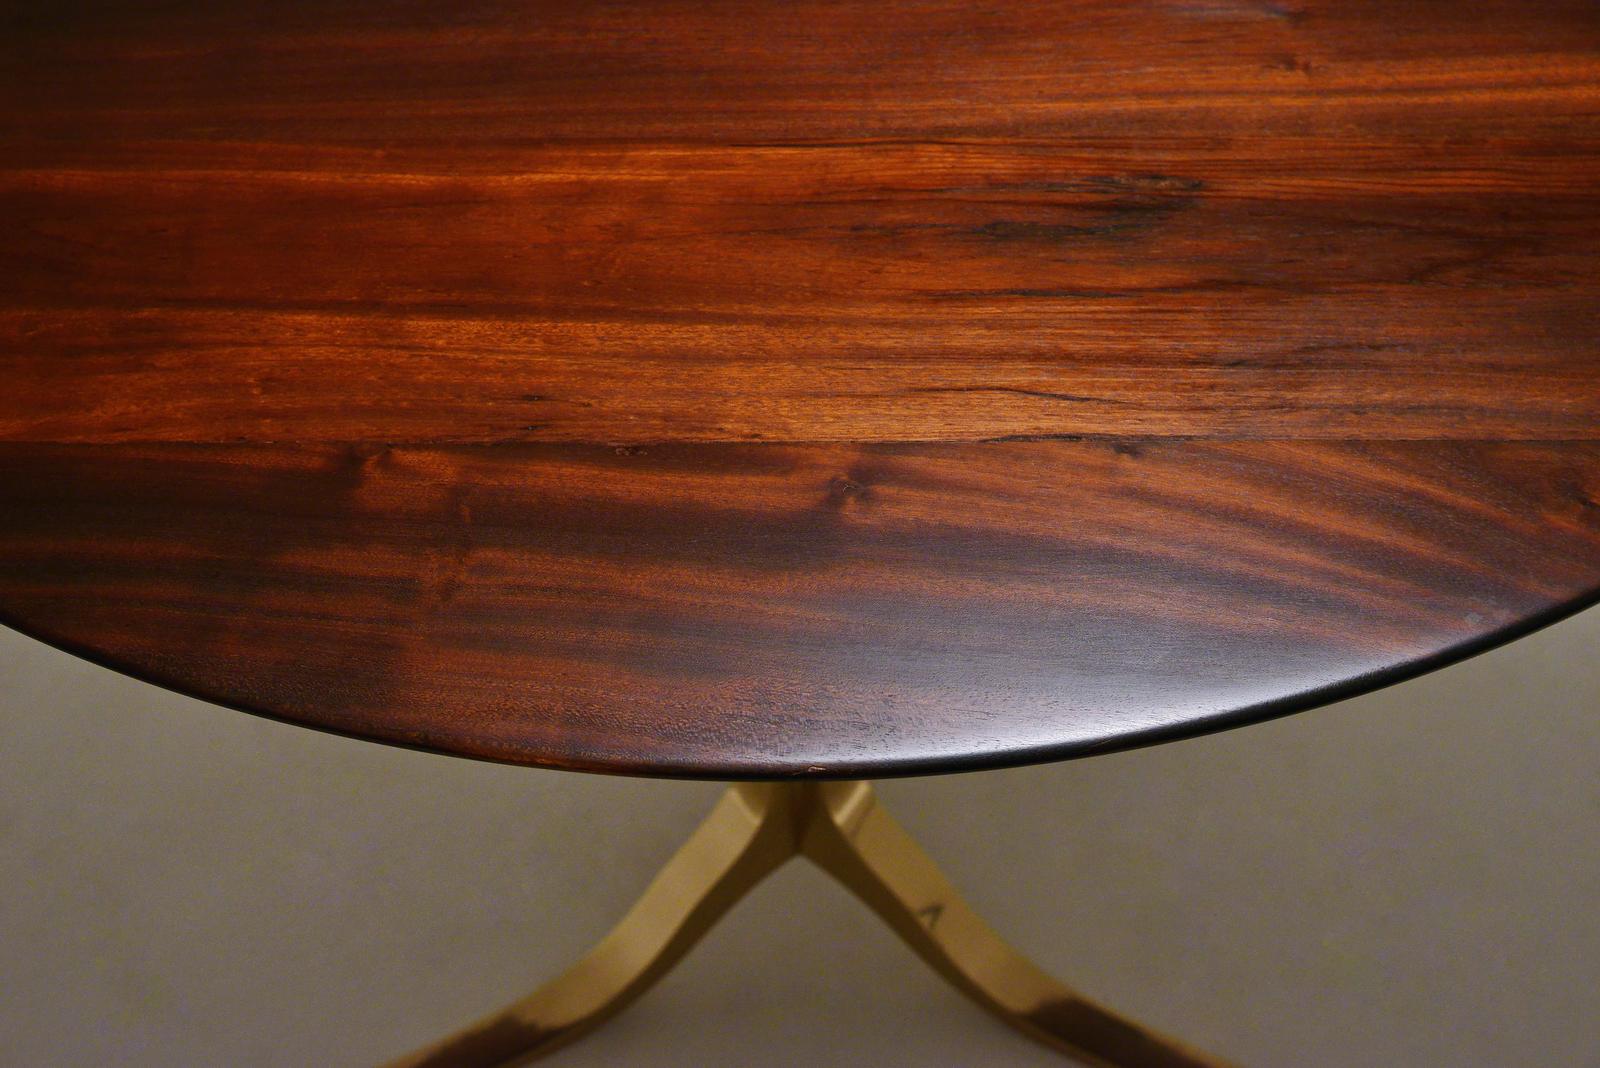 Minimalist Bespoke Round Table, Reclaimed Hardwood, Bronze Base by P. Tendercool For Sale